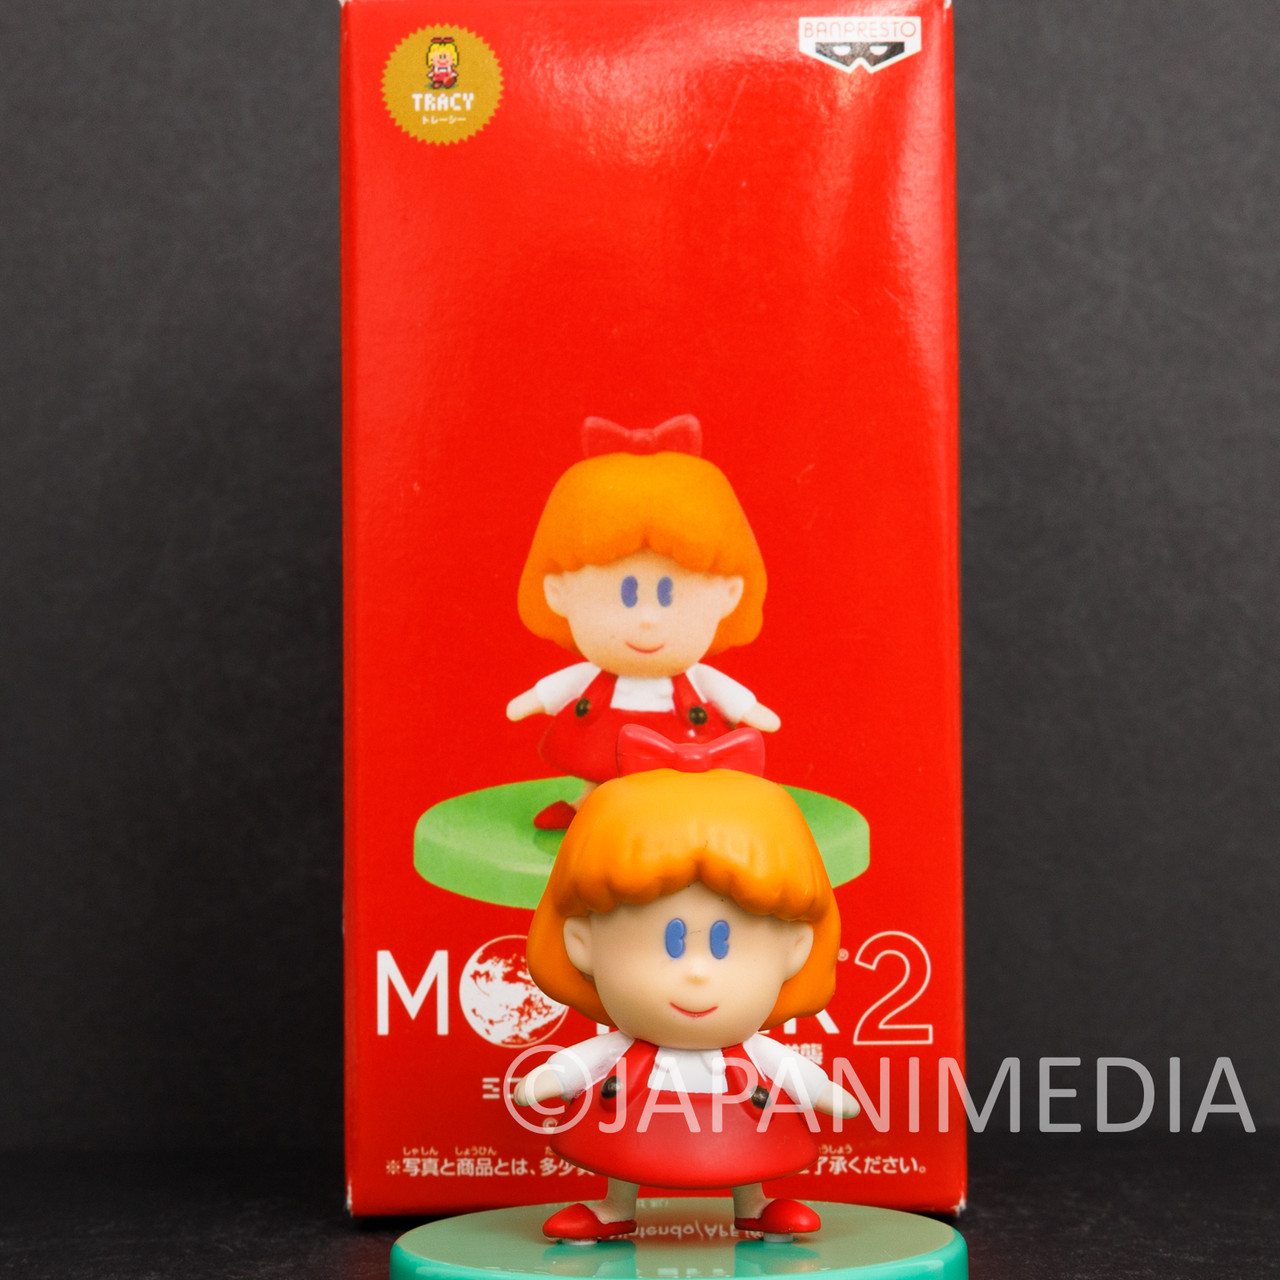 Mother 2 Tracy Mini Figure Collection Earthbound Nintendo Nes Japanimedia Store 5821